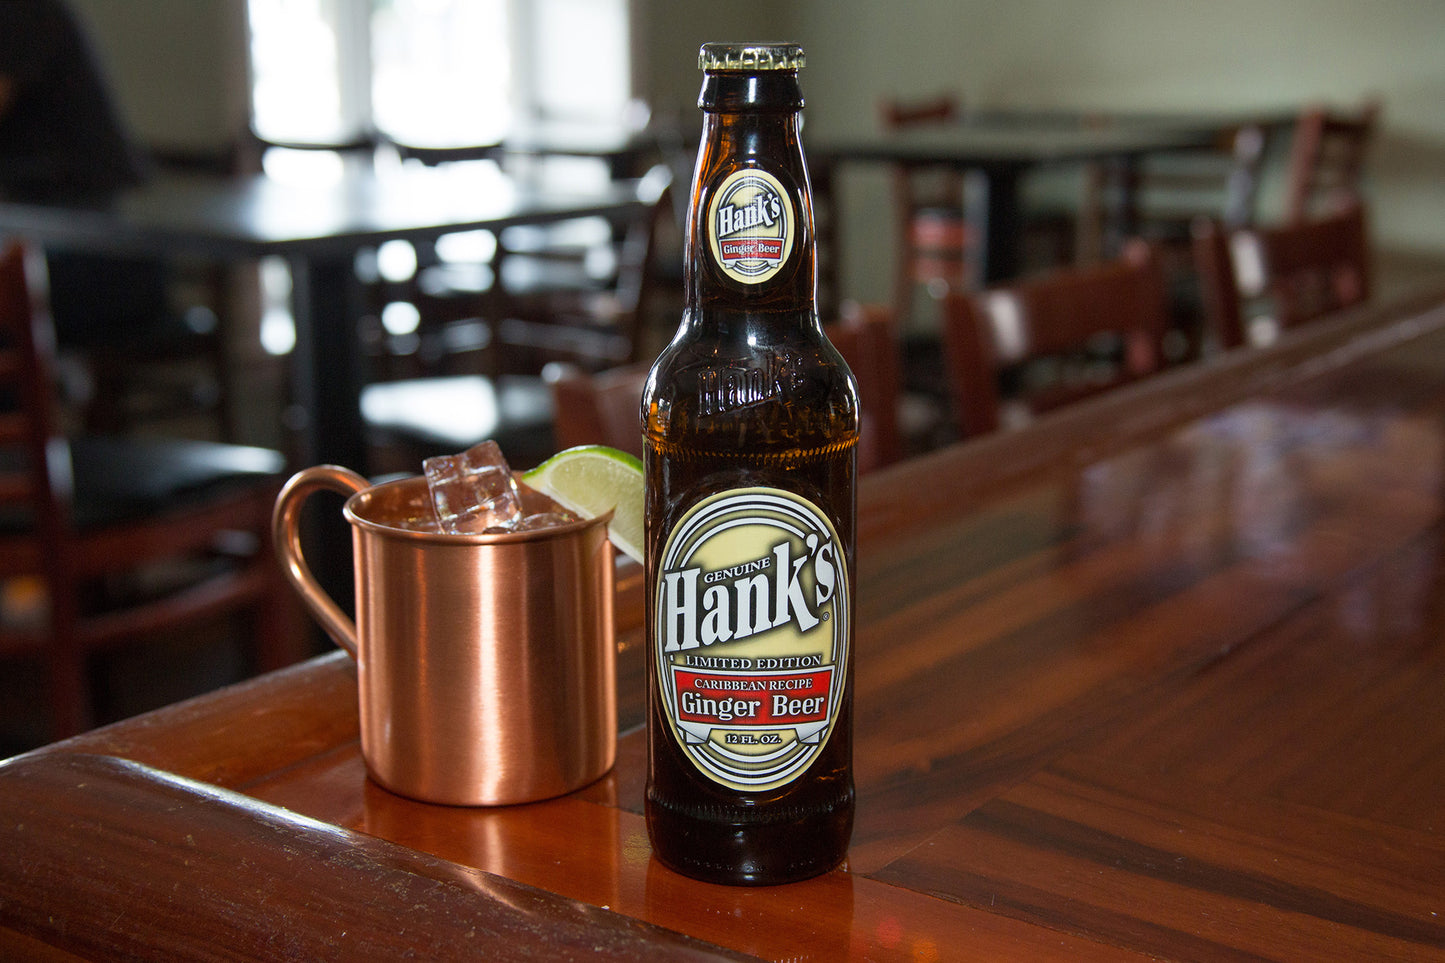 Hank's Caribbean Recipe Ginger Beer